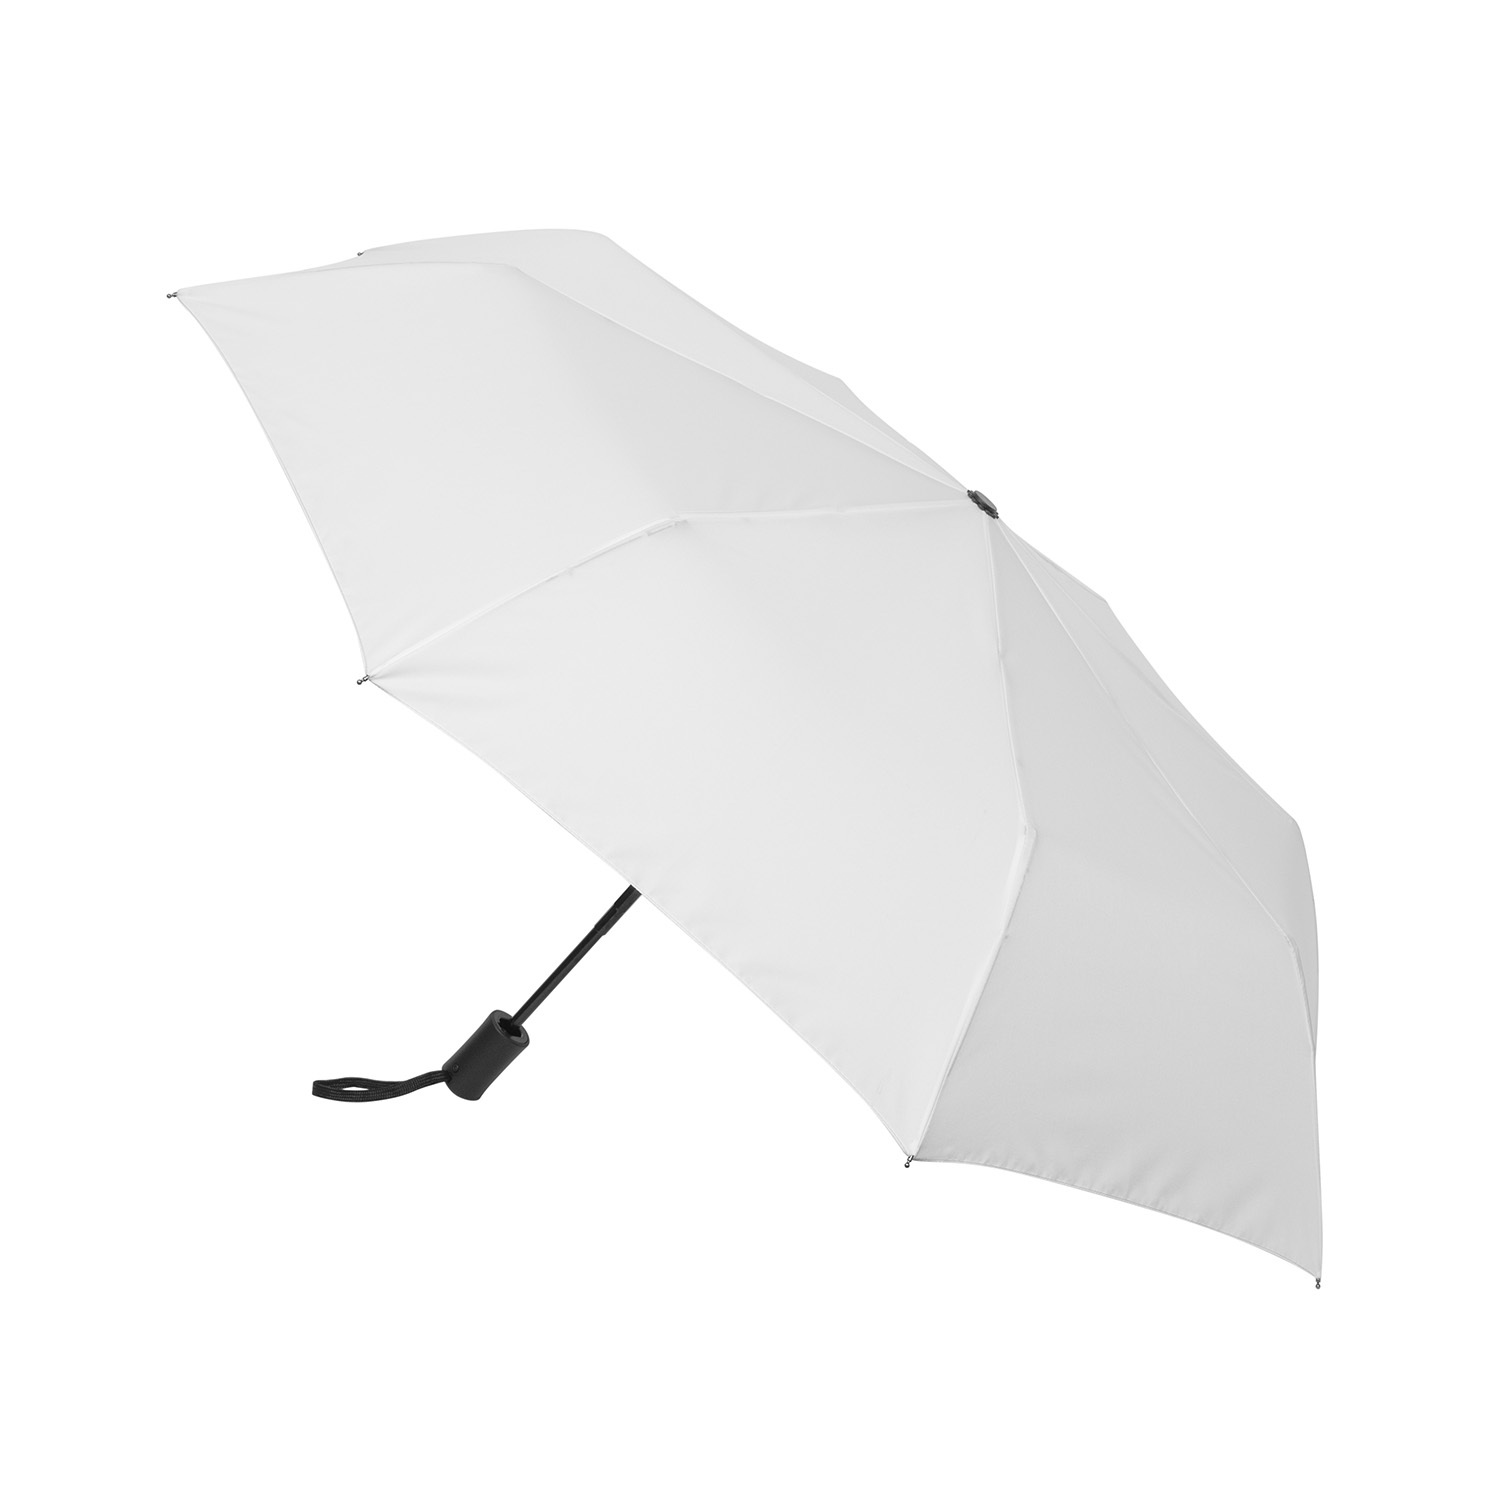 All-Over Print Automatic Umbrella - Print On Demand | HugePOD-3